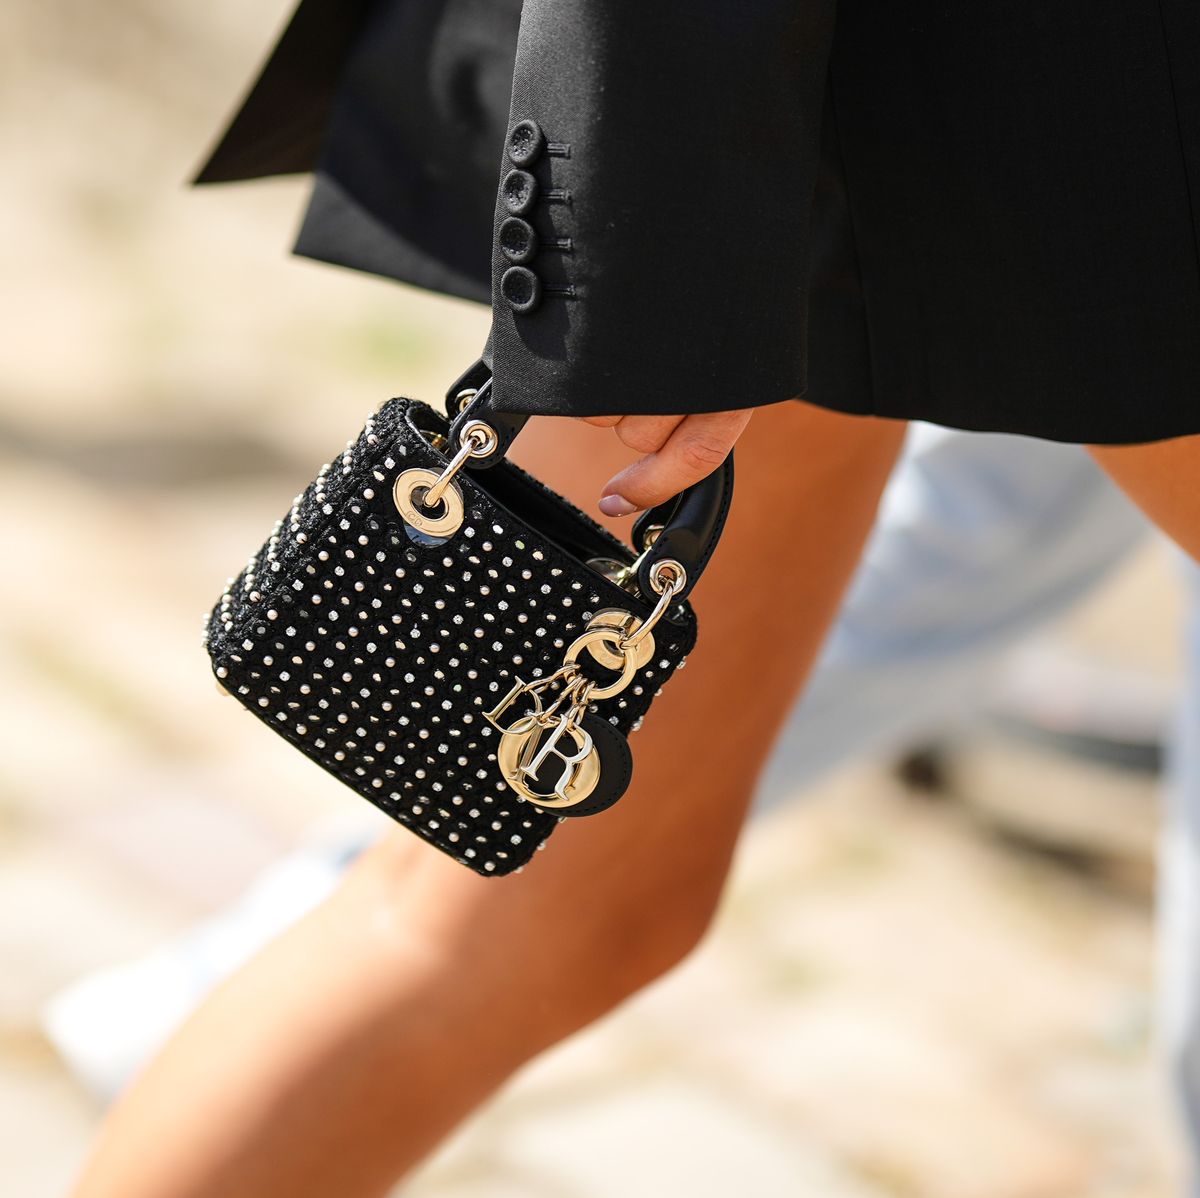 Designer Handbag Fashion Bag Genuine Leather Lady Handbags